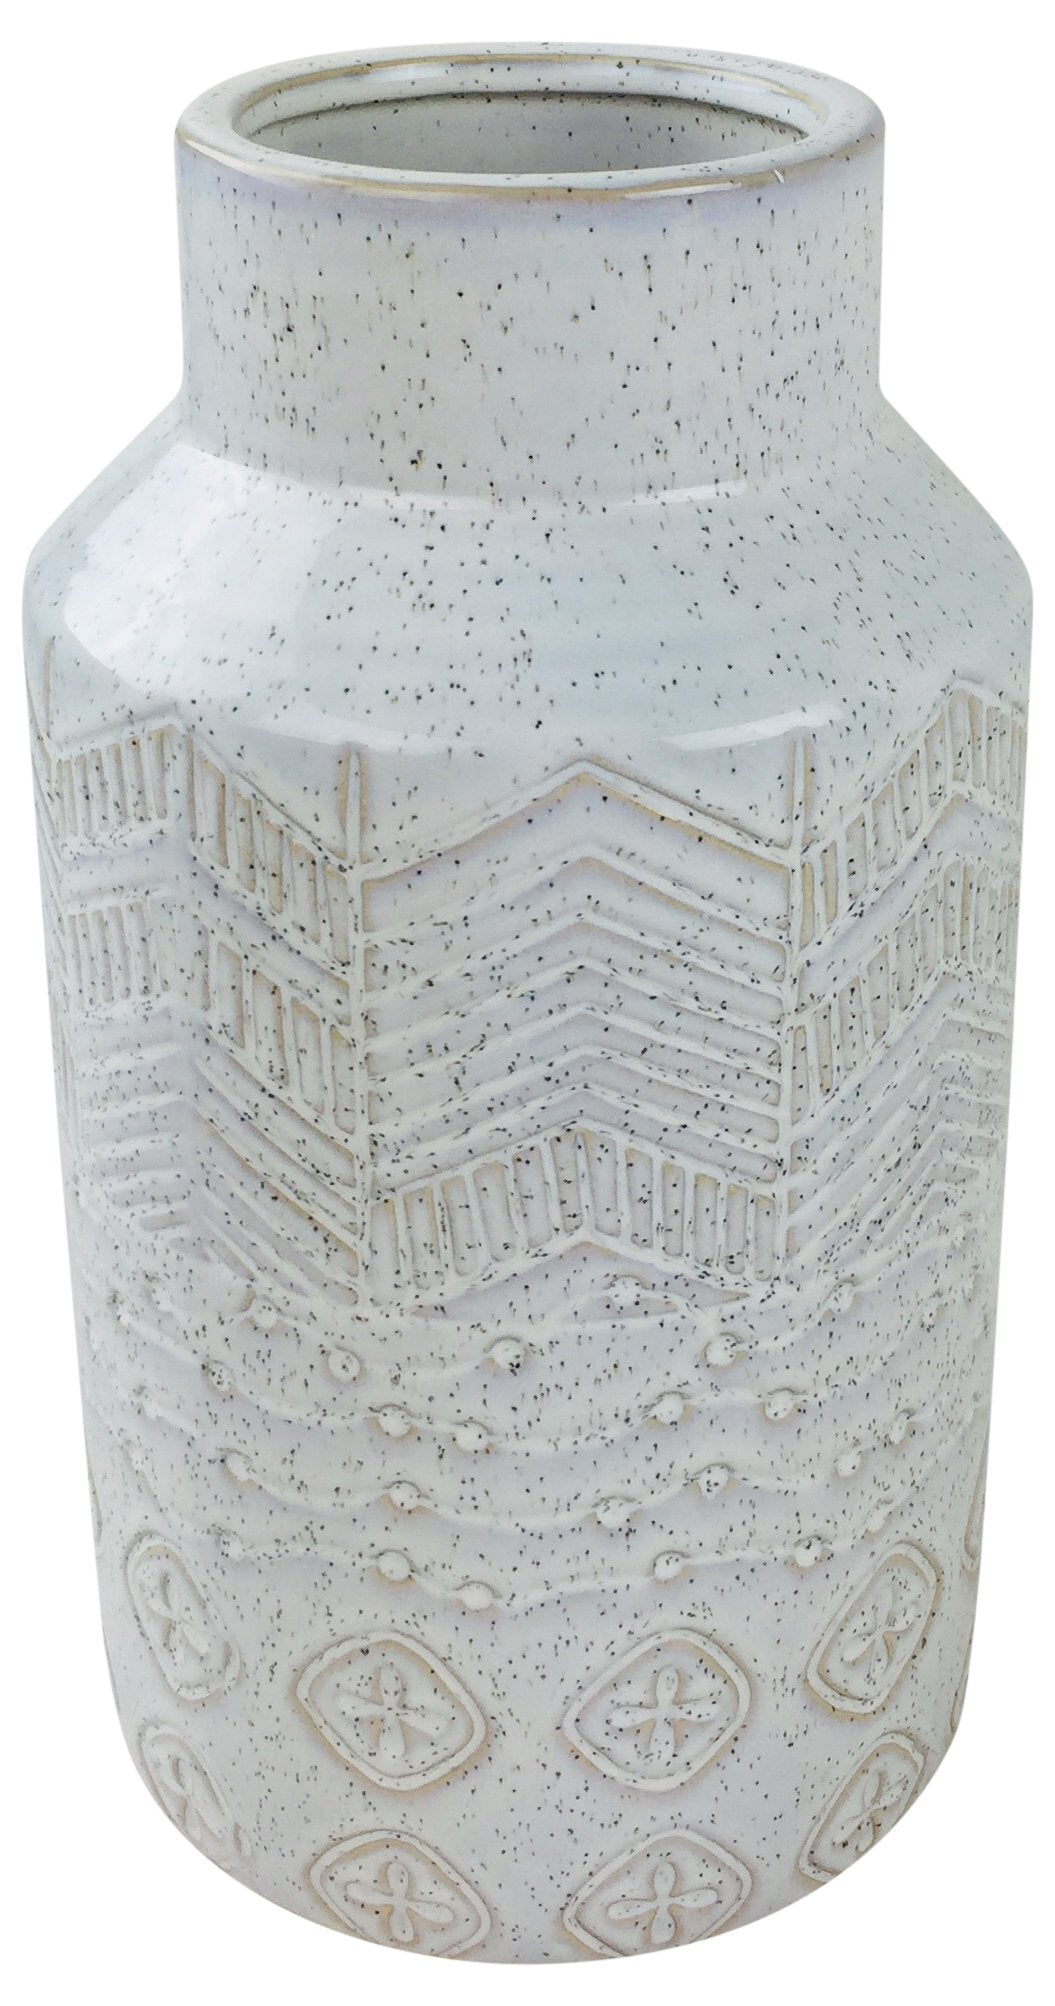 White Herringbone Textured Stoneware Vase 30cm